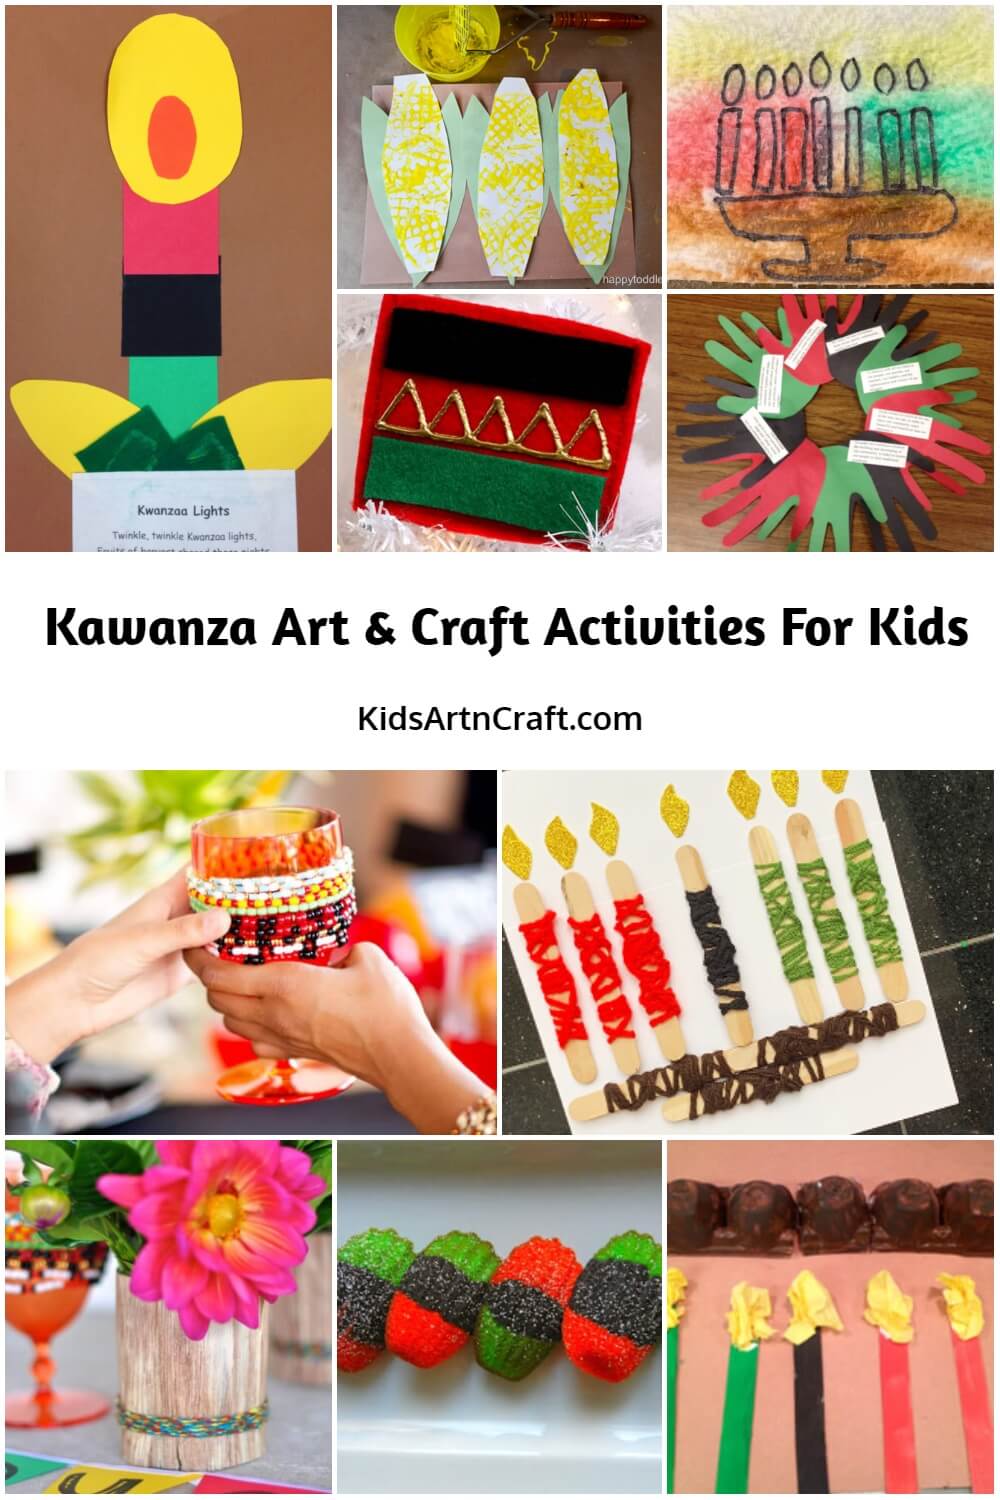 Kawanza Art & Craft Activities for Kids